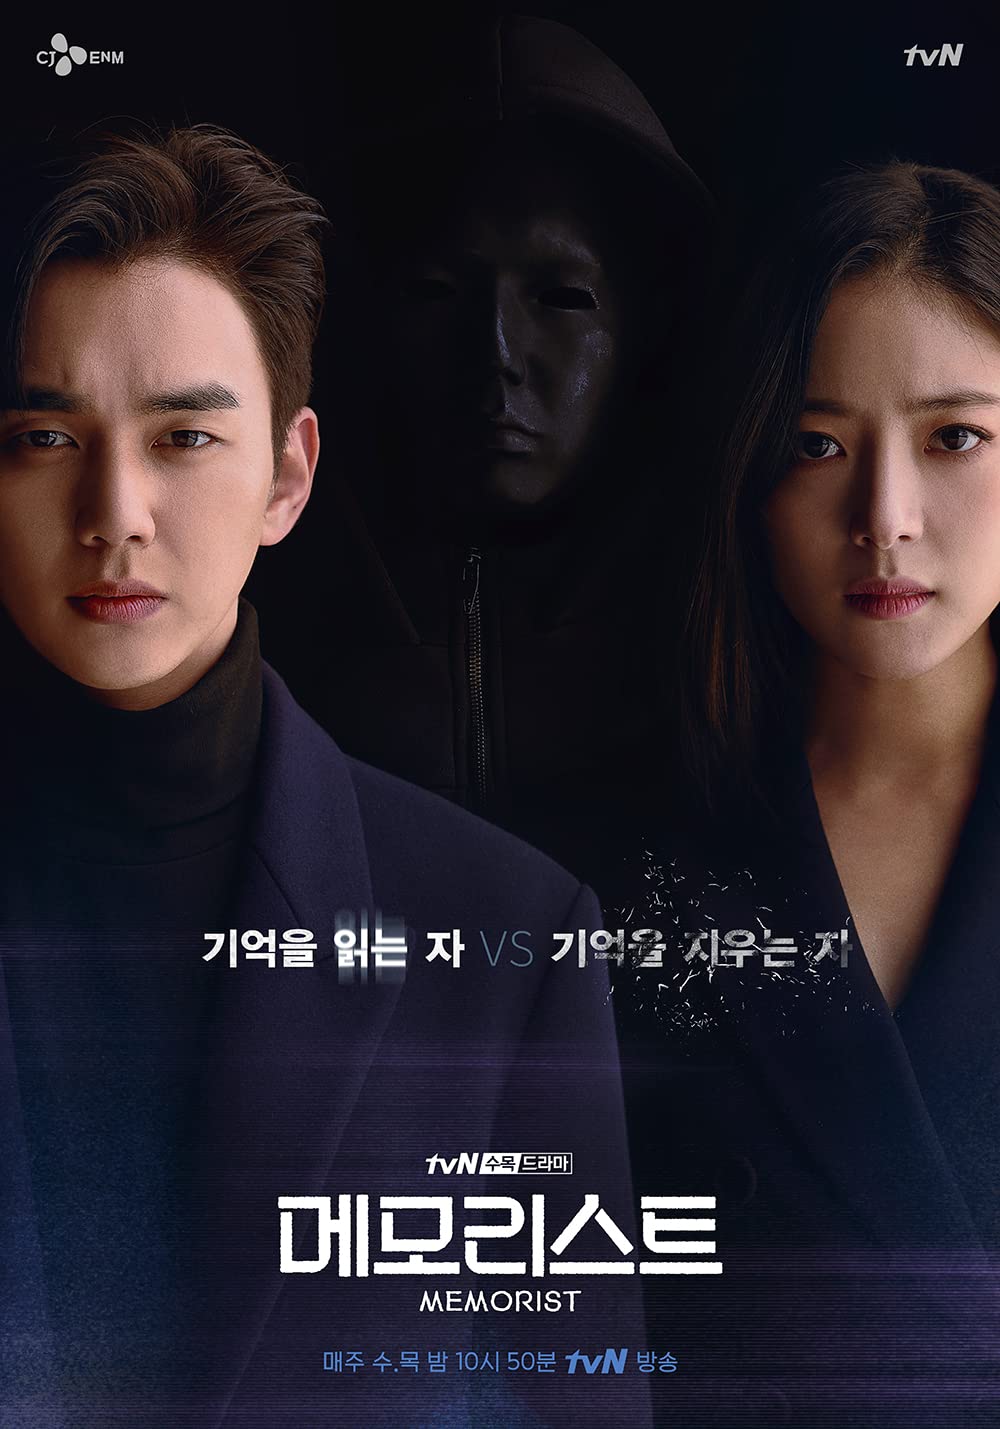 11 Judul drama Korea bikin geregetan, Bad and Crazy bisa ikutan mukul